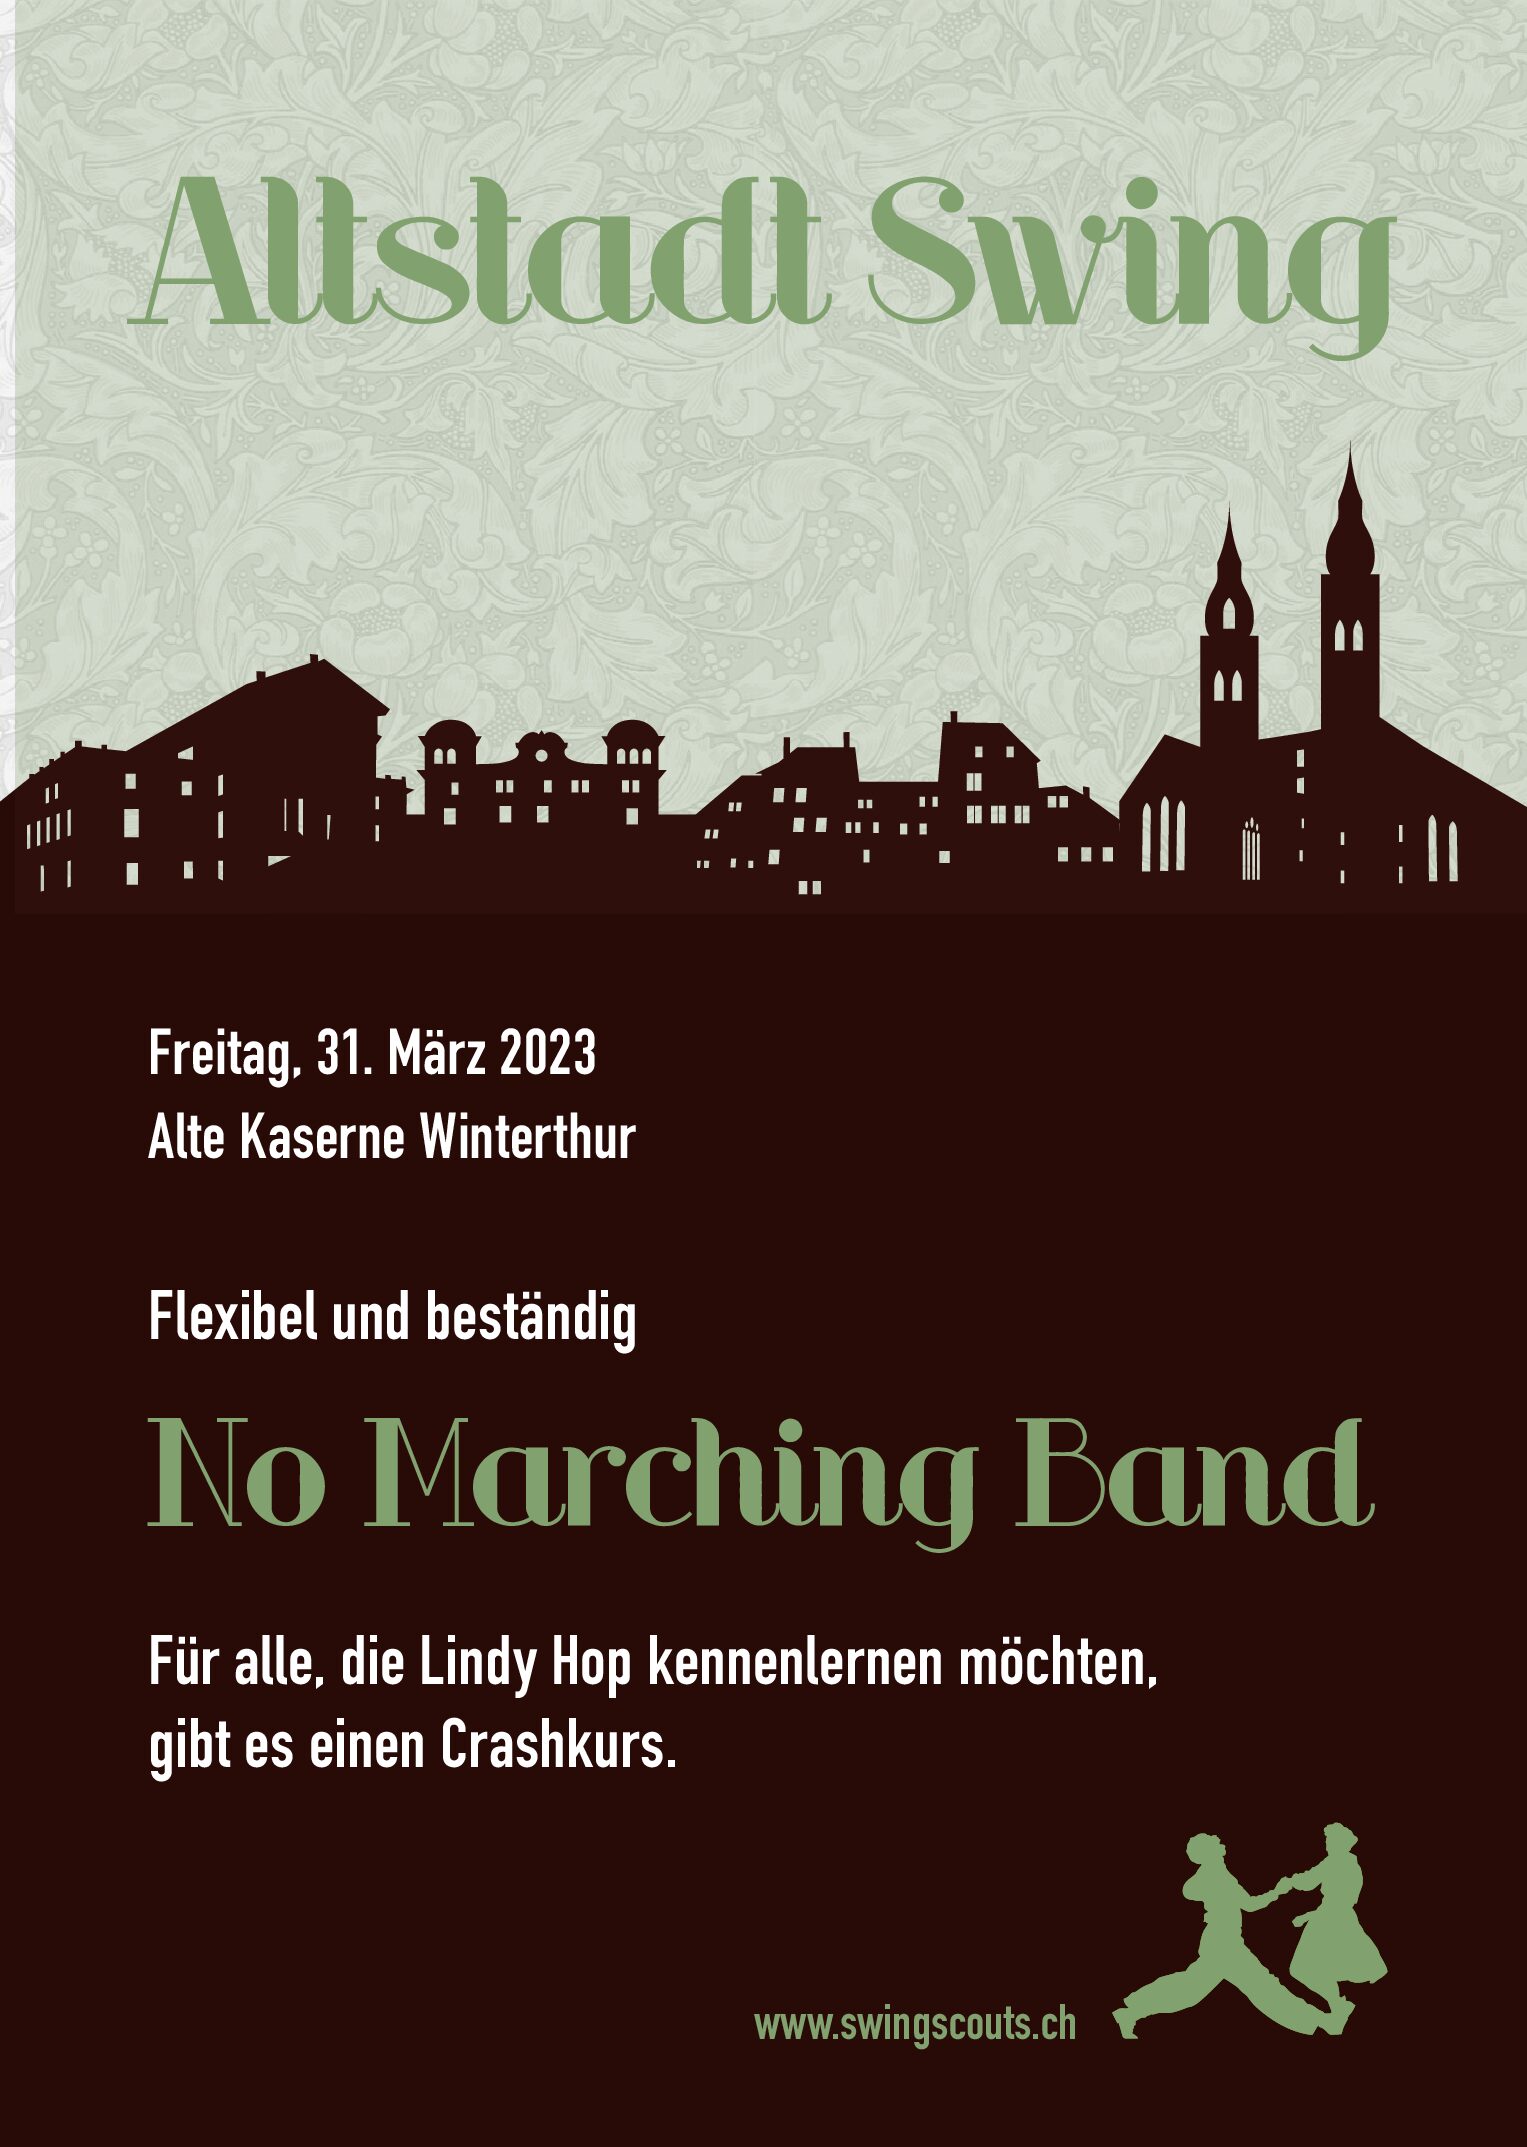 Fr. 31.03.2023 # Altstadtswing mit No Marching Band